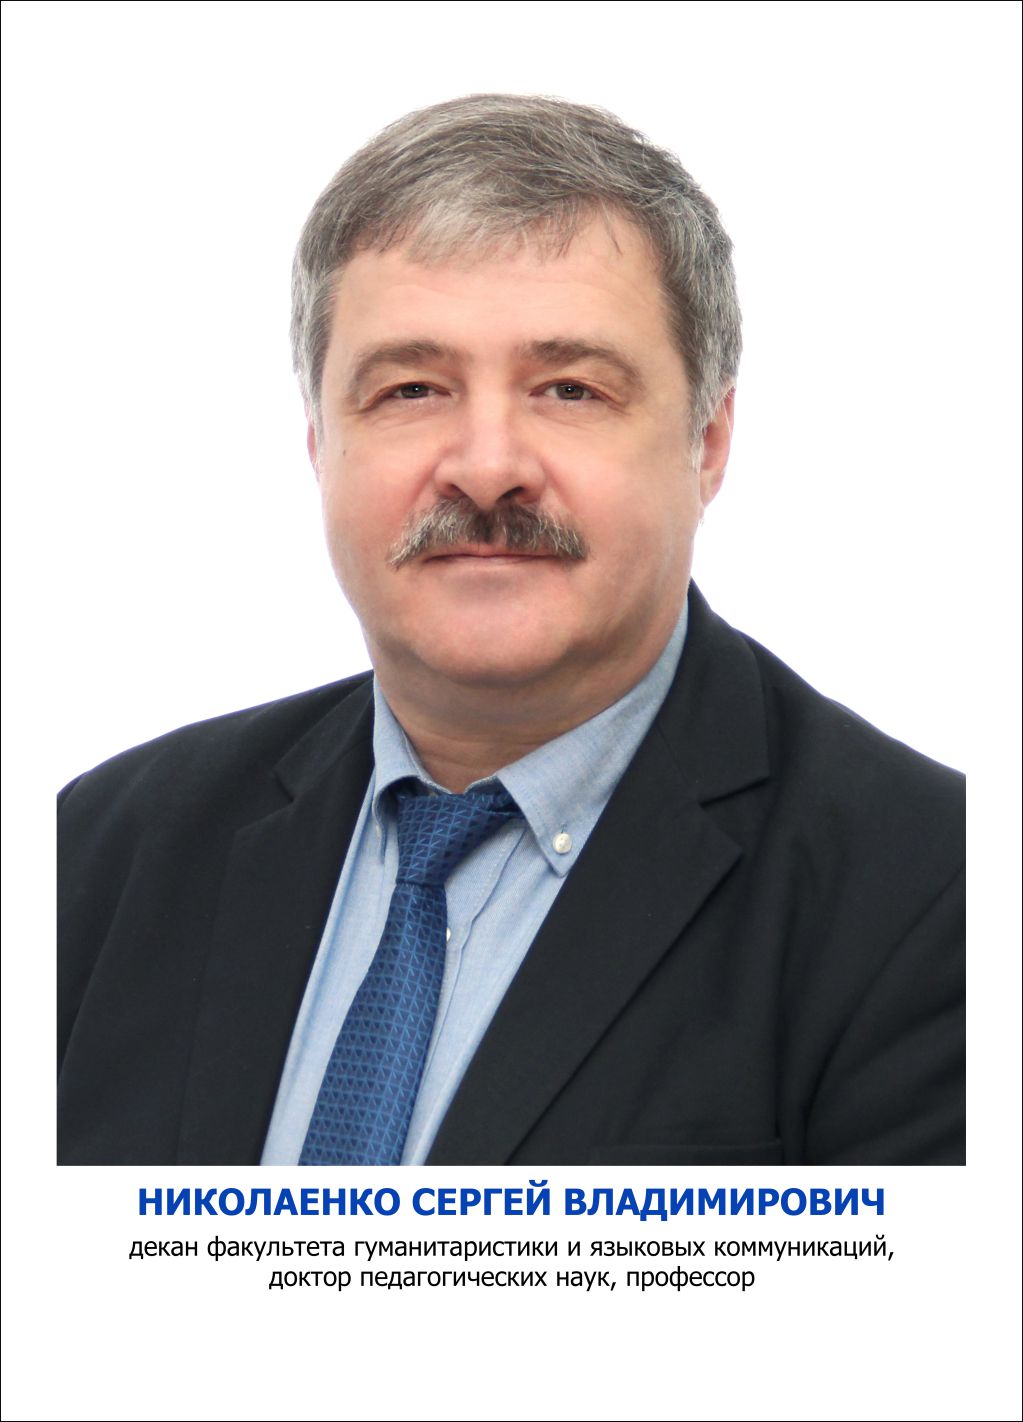 Николаенко Сергей Владимирович